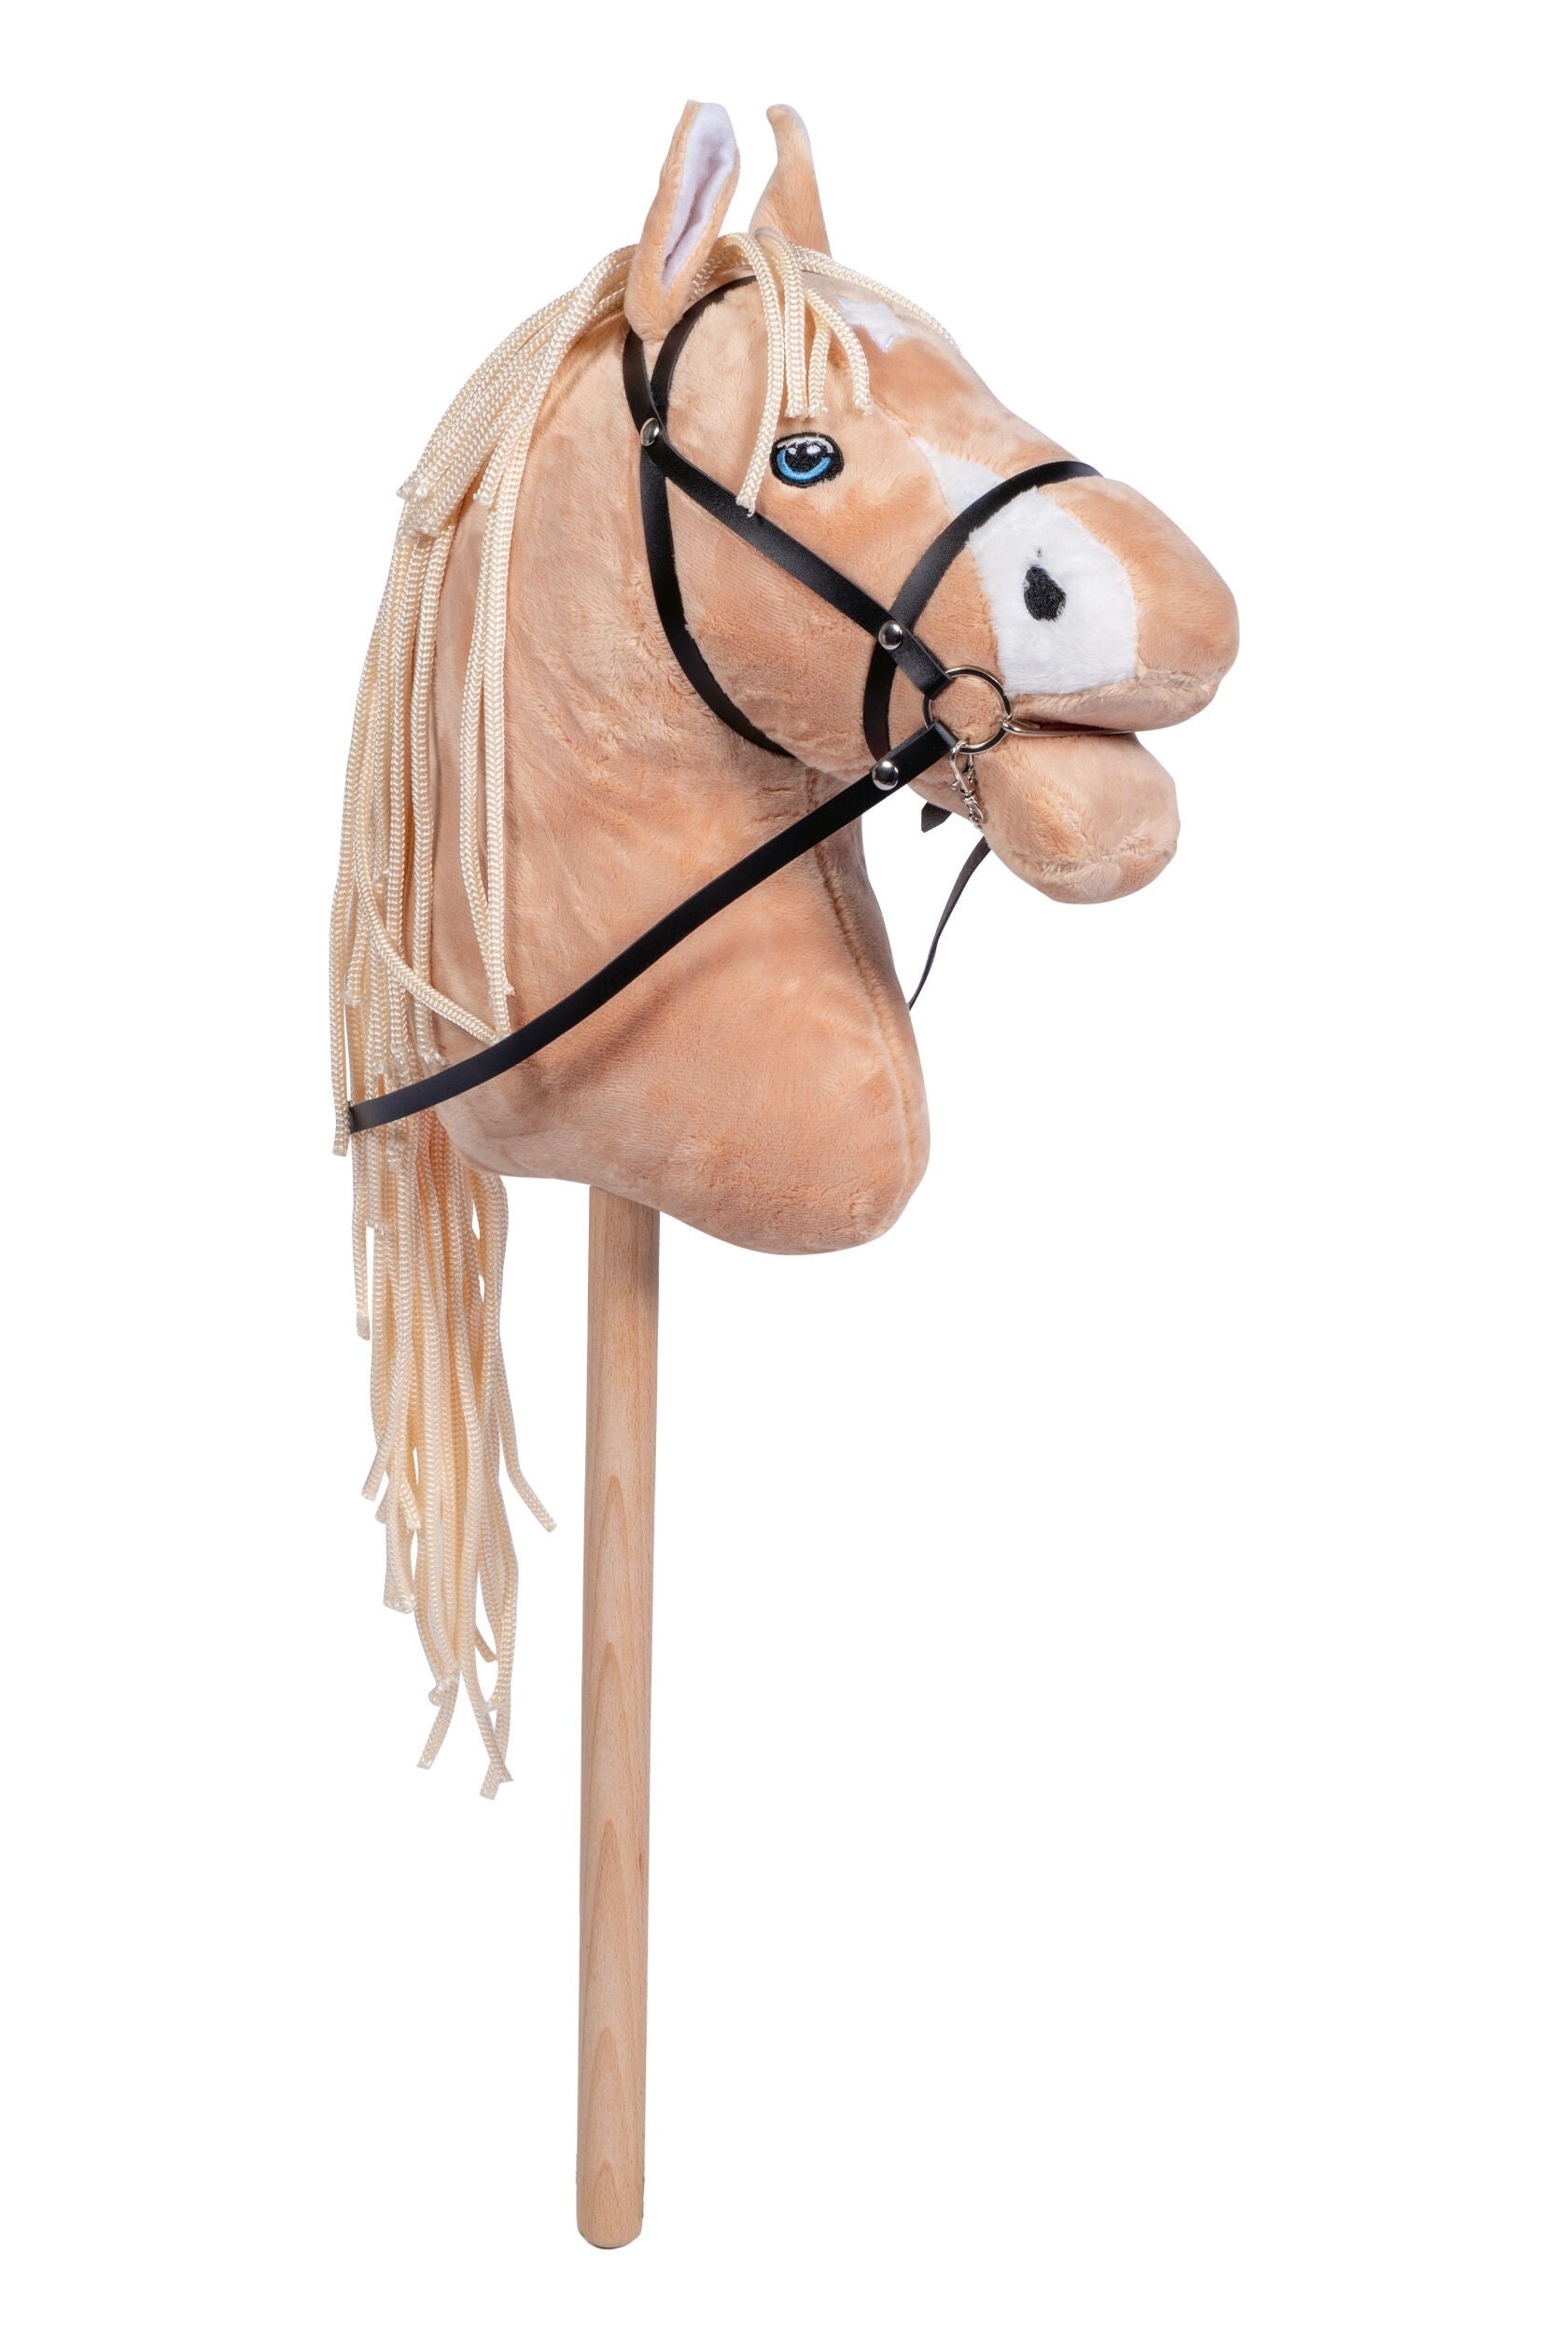 Hobby Horse – Wonder Equestrian